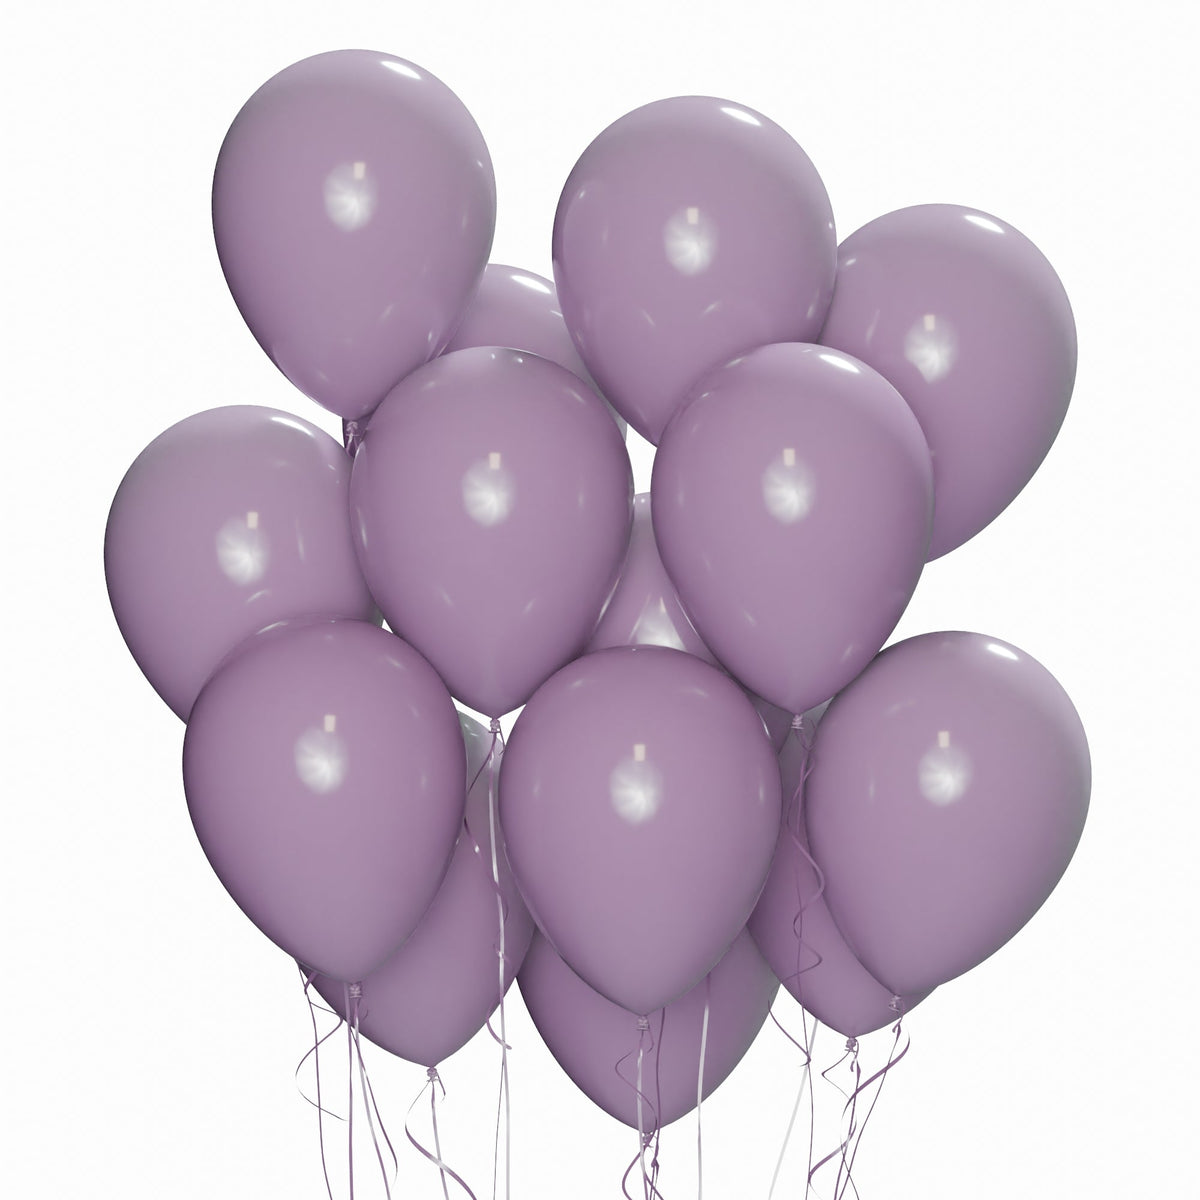 WIDE OCEAN INTERNATIONAL TRADE BEIJING CO., LTD Balloons Boho Purple Latex Balloons, 12 Inches, 15 Count 810120711744